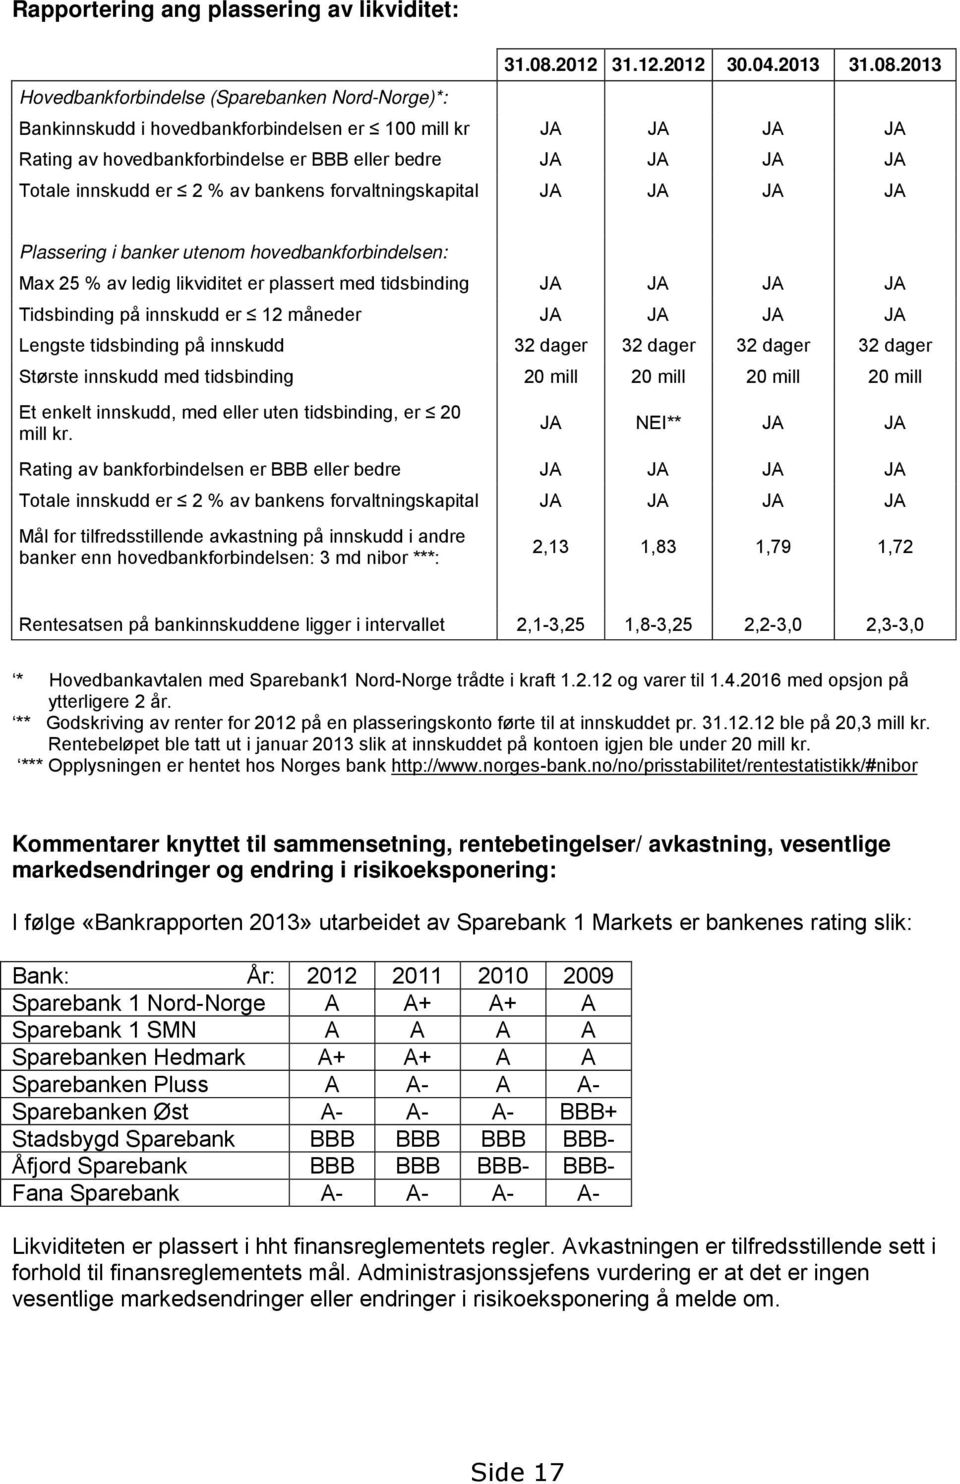 2013 Hovedbankforbindelse (Sparebanken Nord-Norge)*: Bankinnskudd i hovedbankforbindelsen er 100 mill kr JA JA JA JA Rating av hovedbankforbindelse er BBB eller bedre JA JA JA JA Totale innskudd er 2